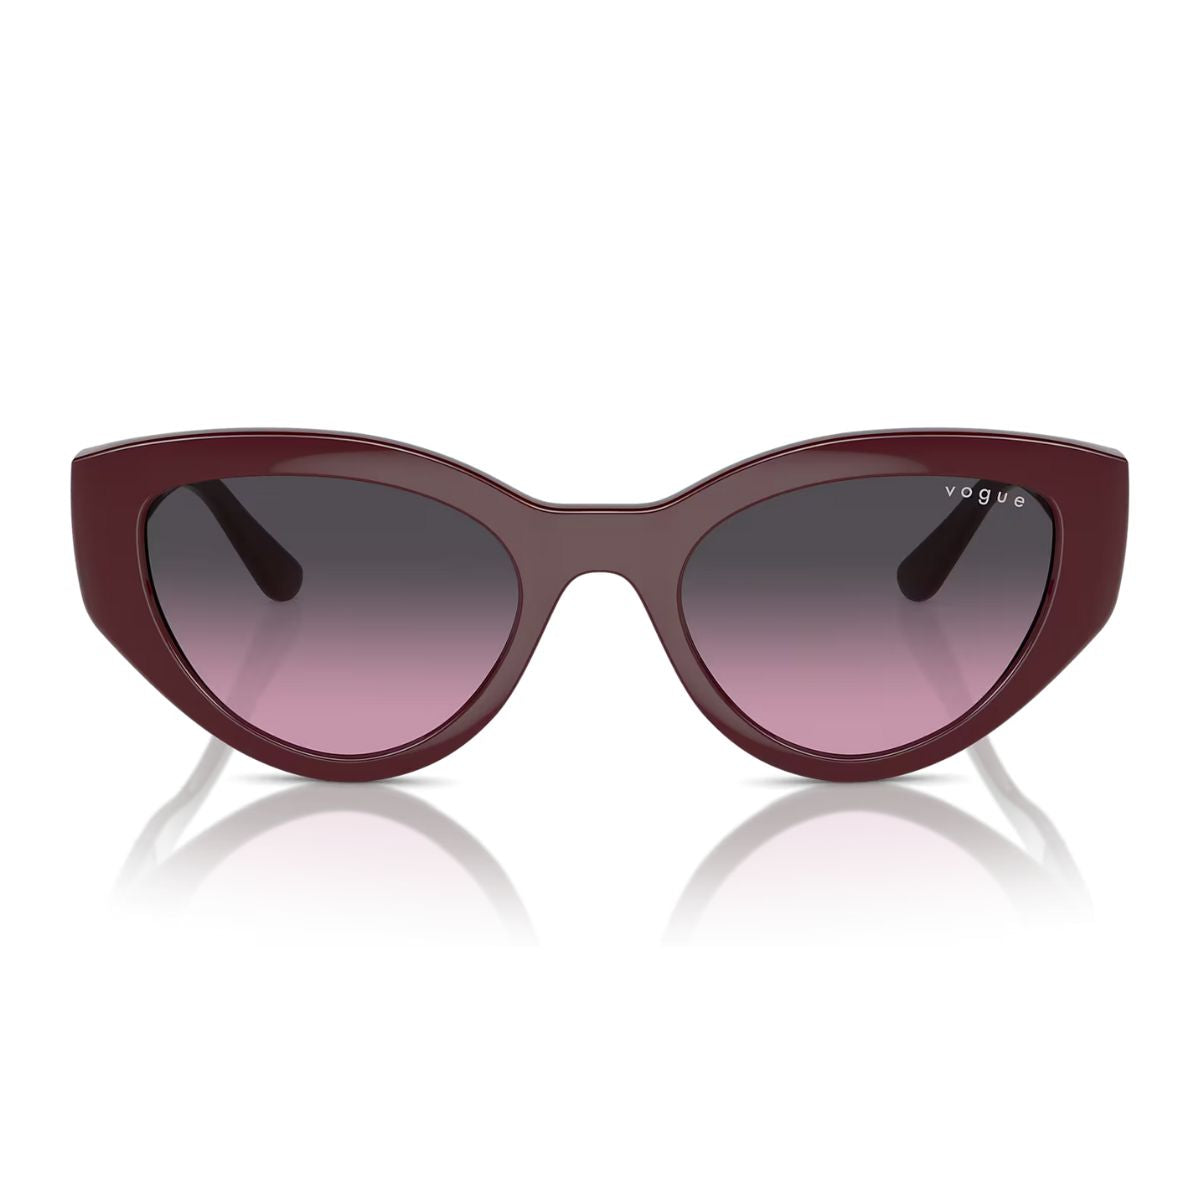 "Shop Latest Vogue Cat Eye Sunglasses For Women's At Optorium